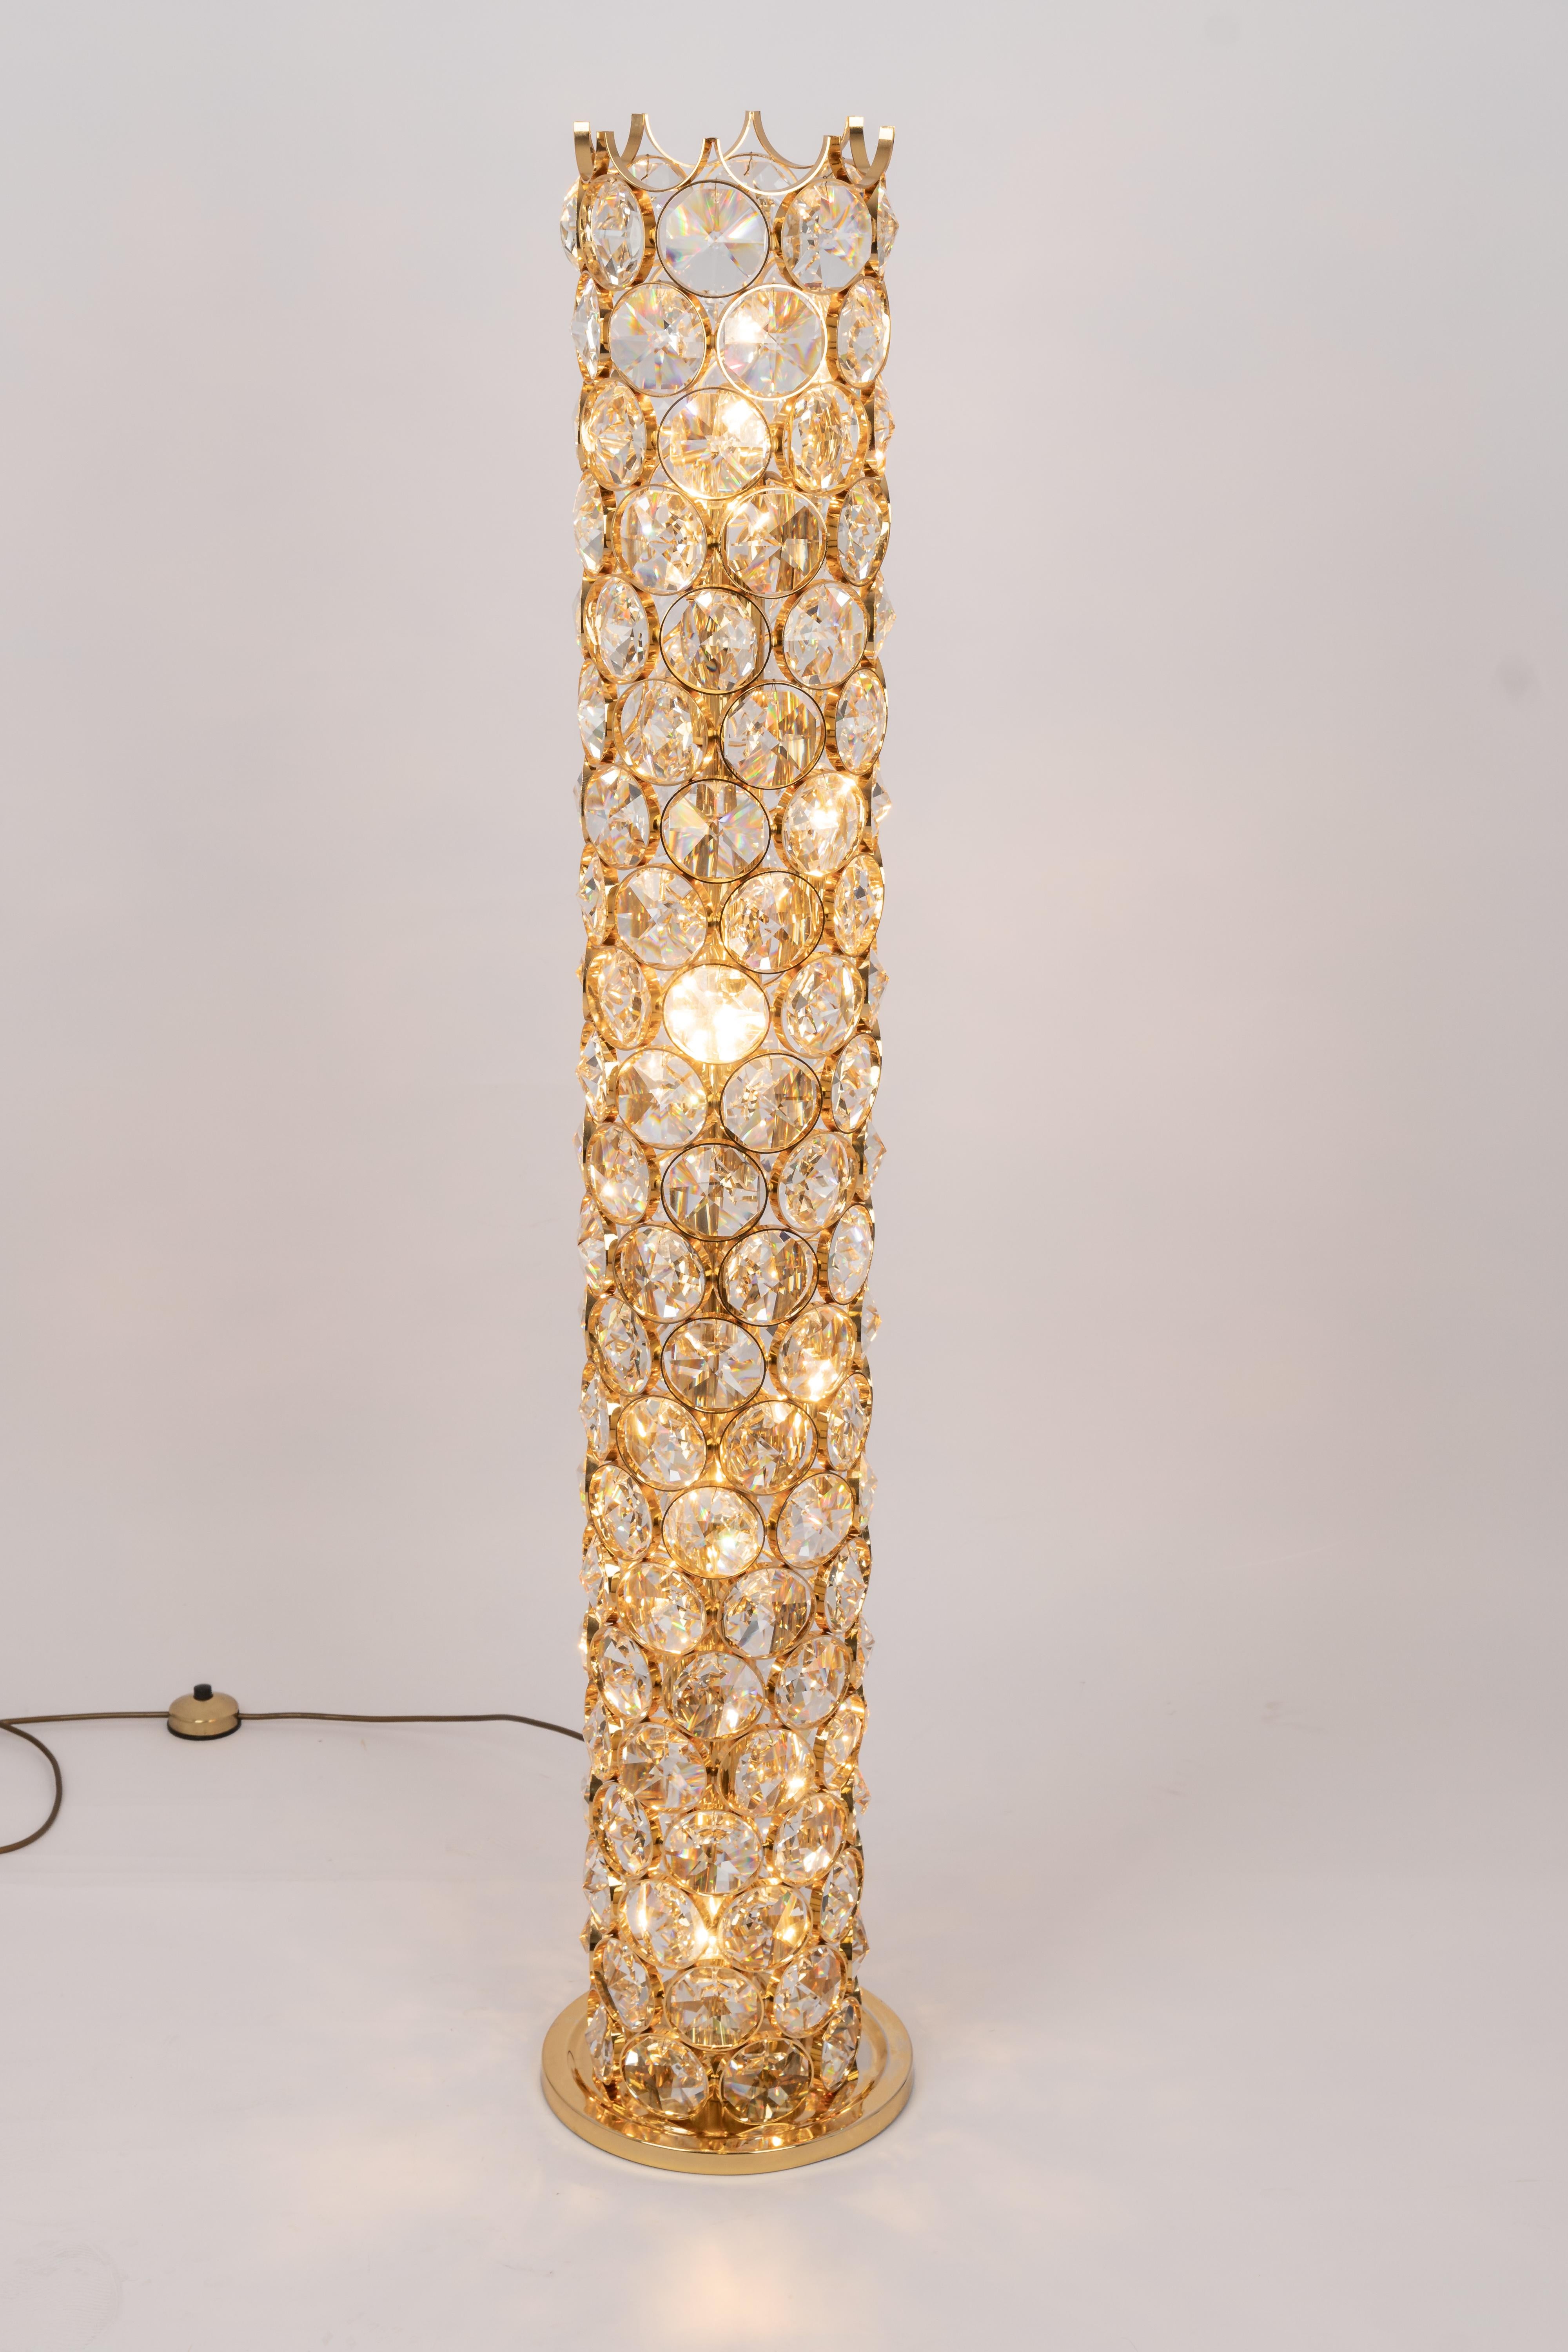 Exquisite Gilt Jewel Floor Lamp Sciolari Design by Palwa, Germany, 1960s For Sale 2